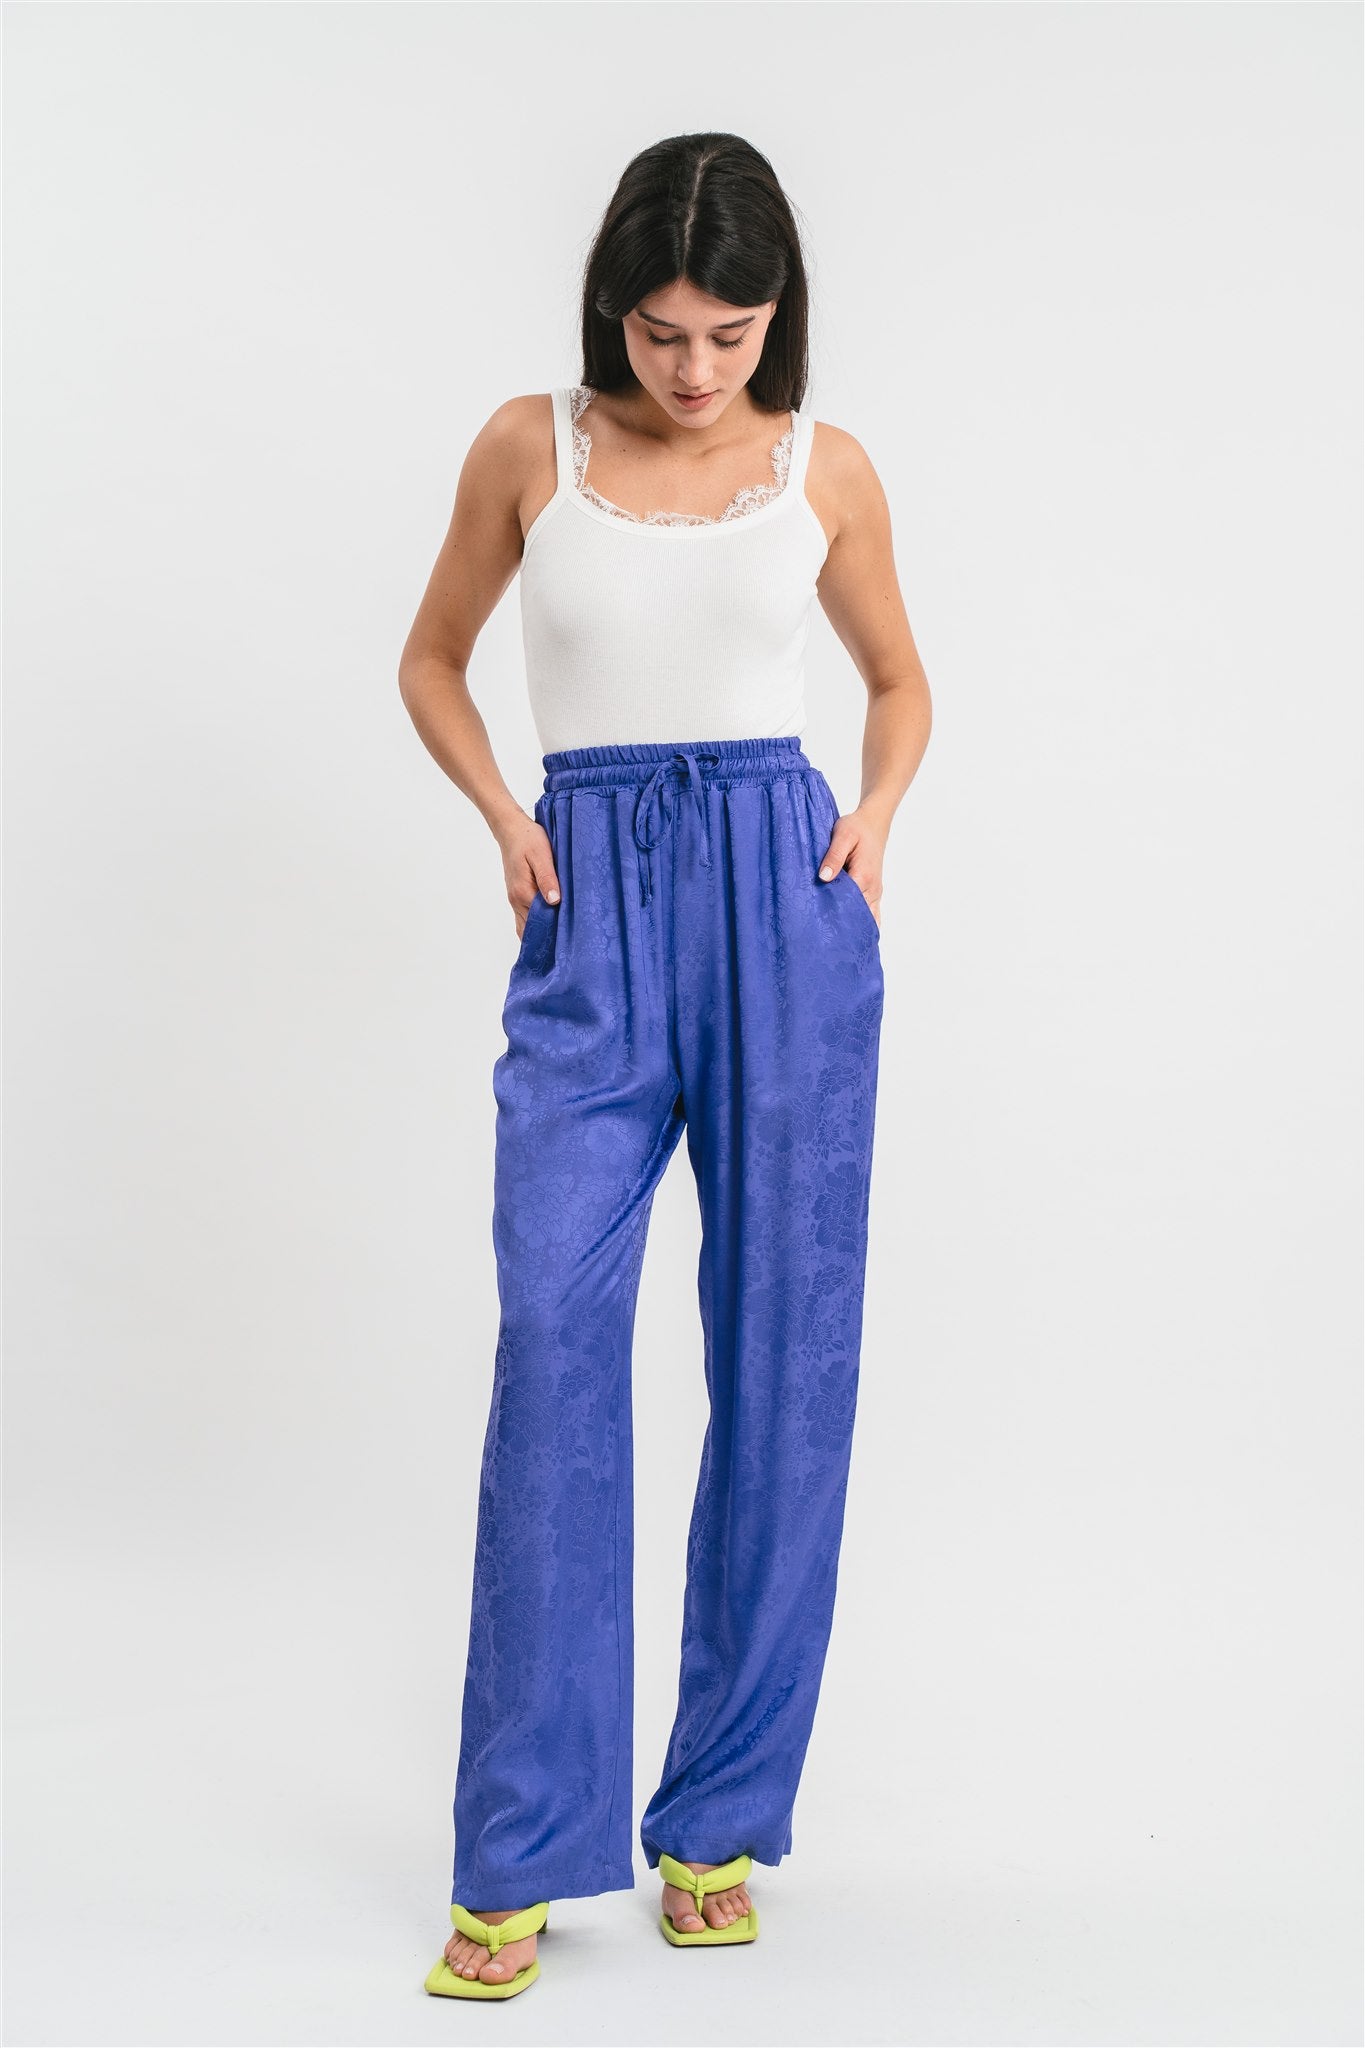 Jacquard pants with elastic waistband